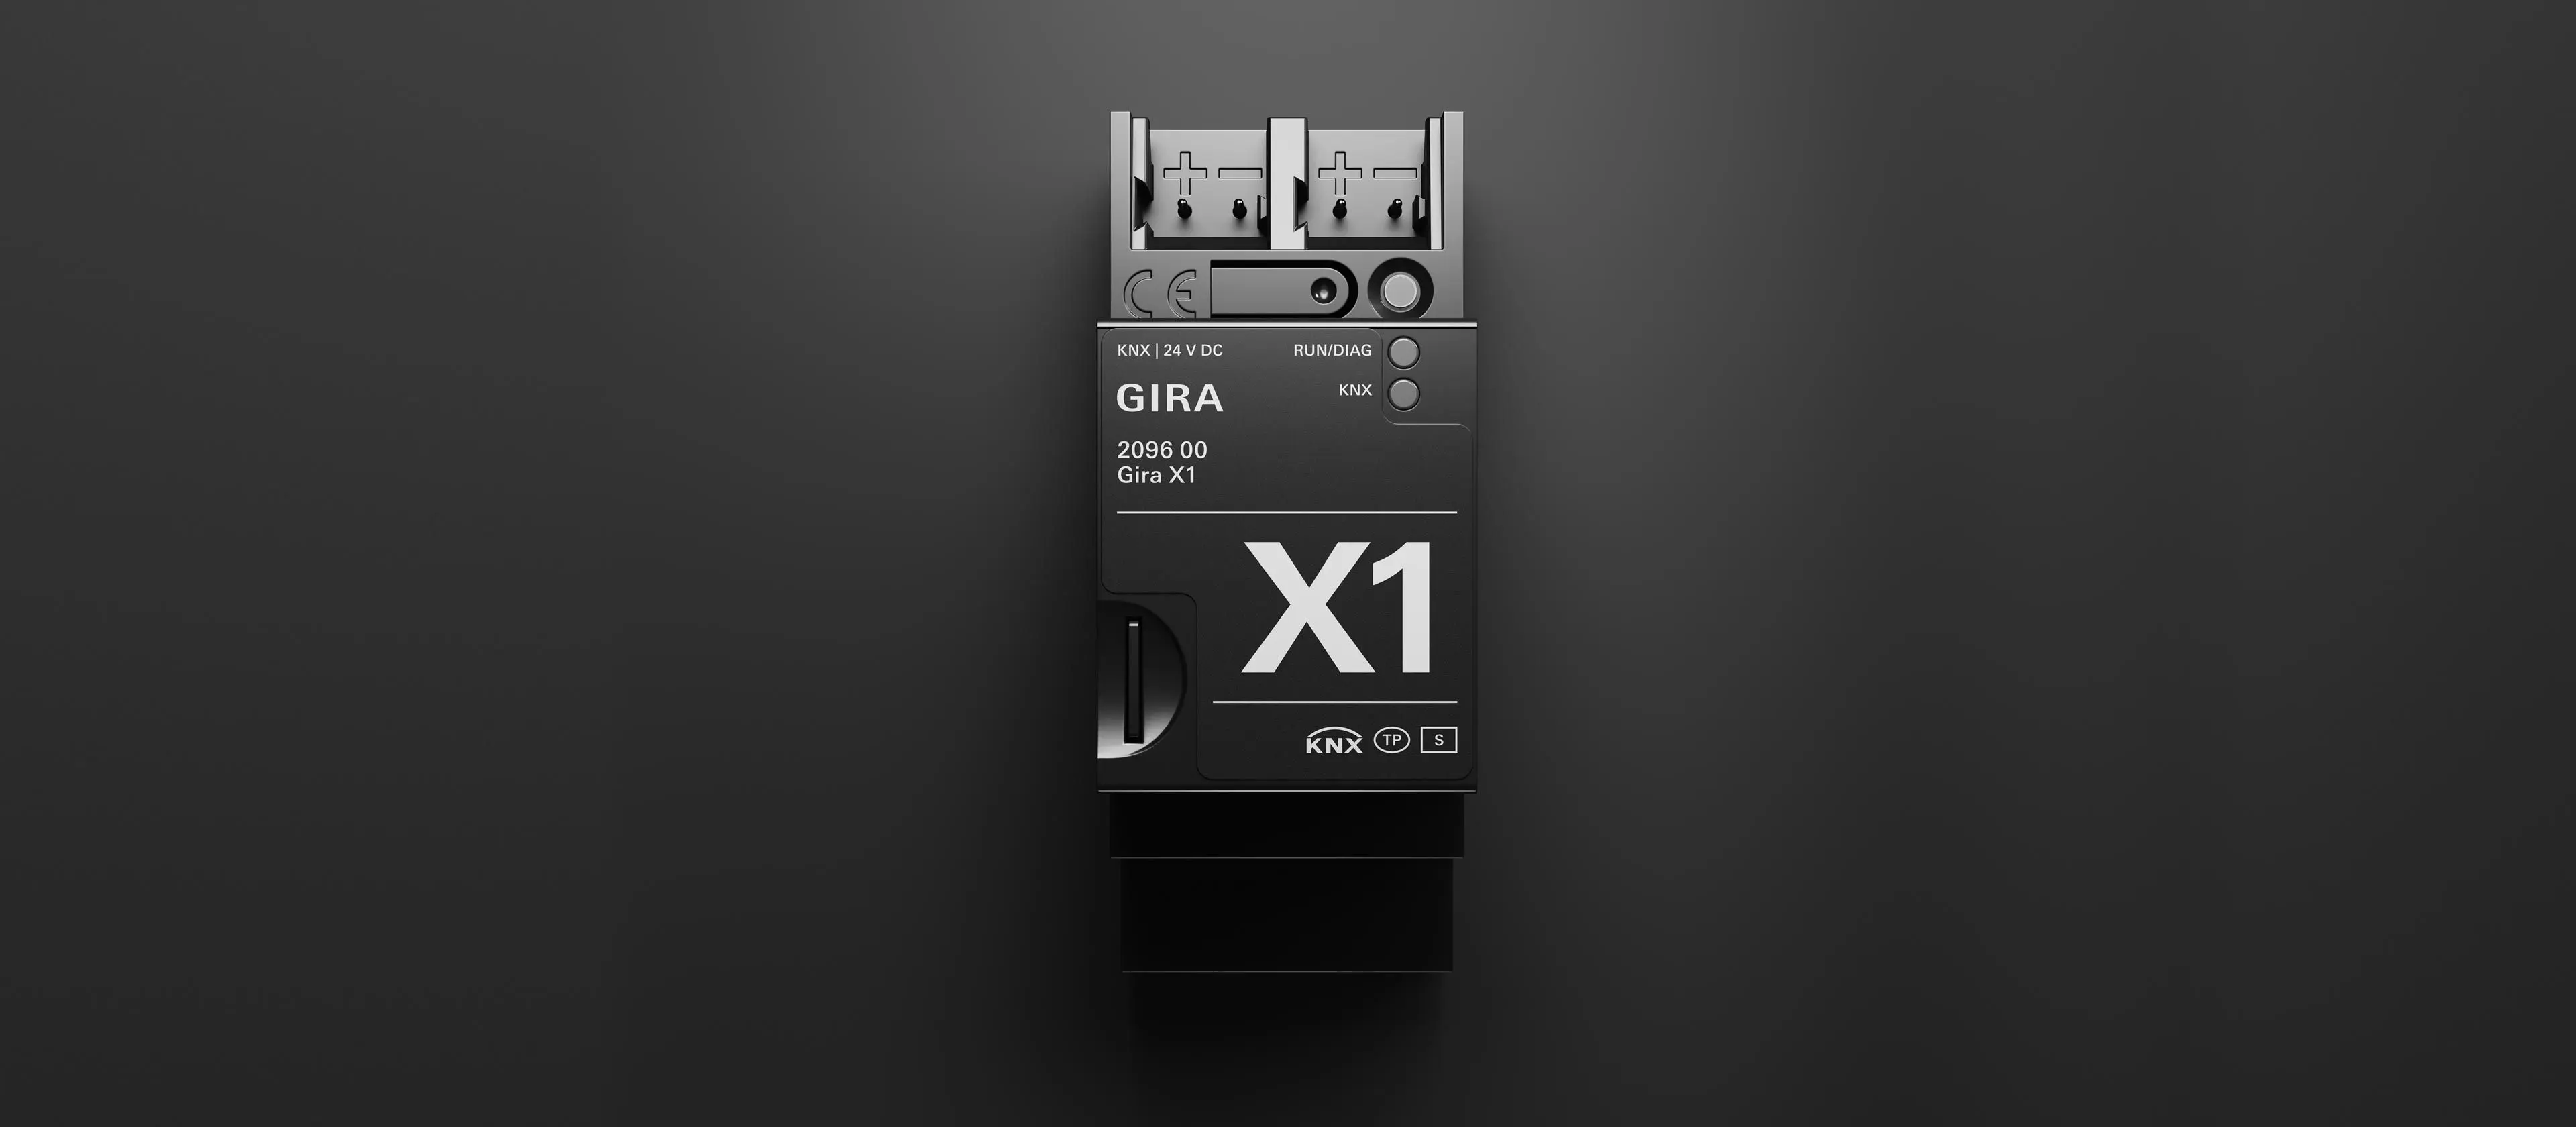 X1-Gira-KNX-AB167-micromatic.jpg